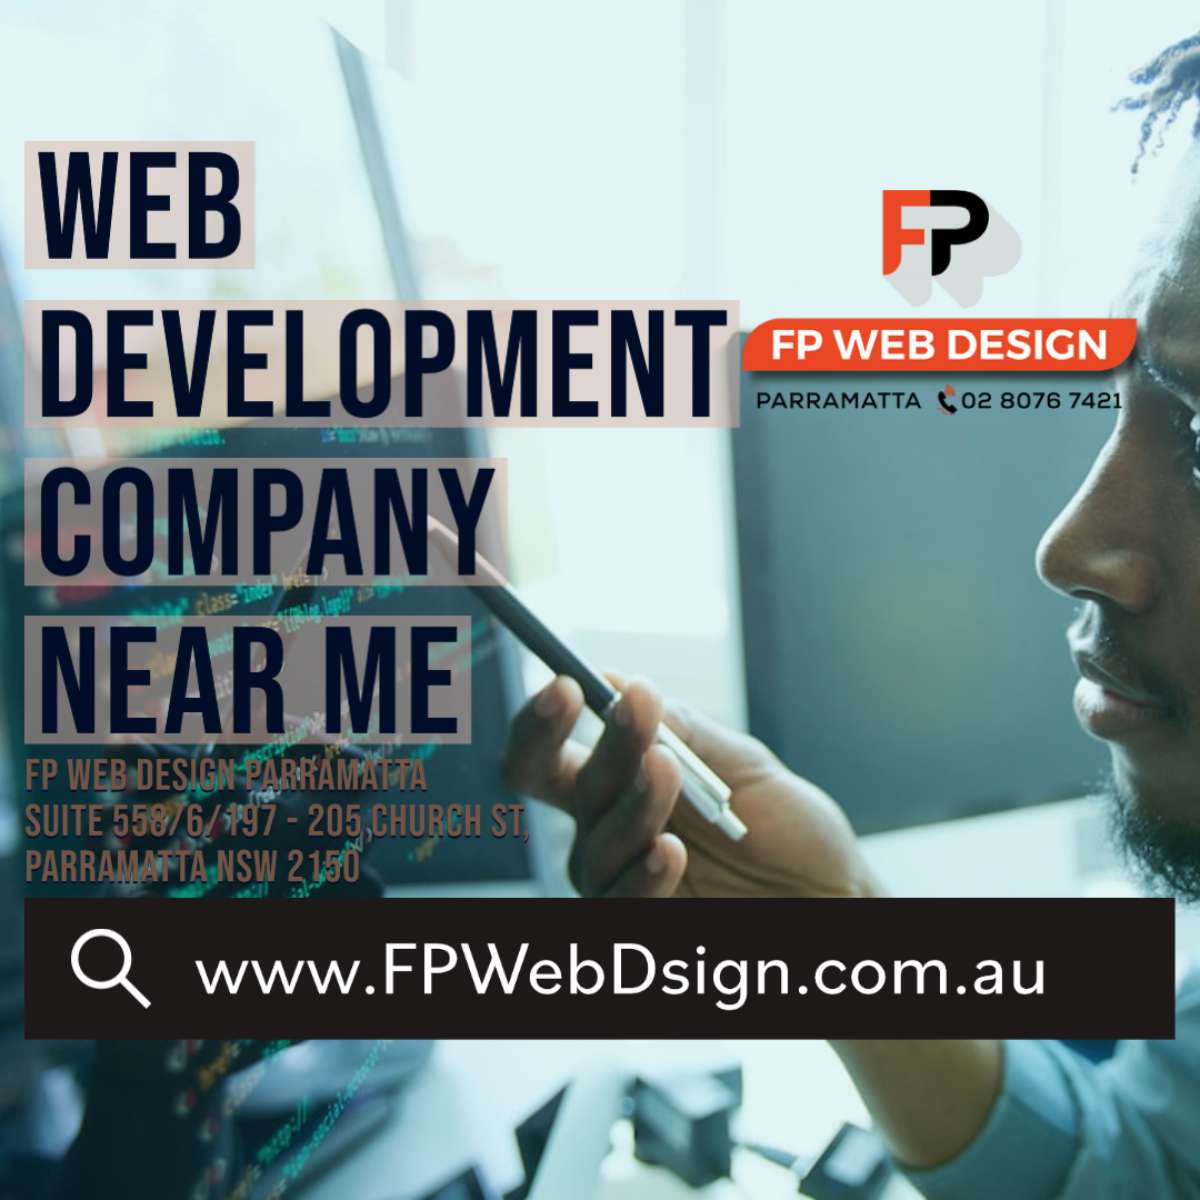 Web-Development-Company-Near-Me